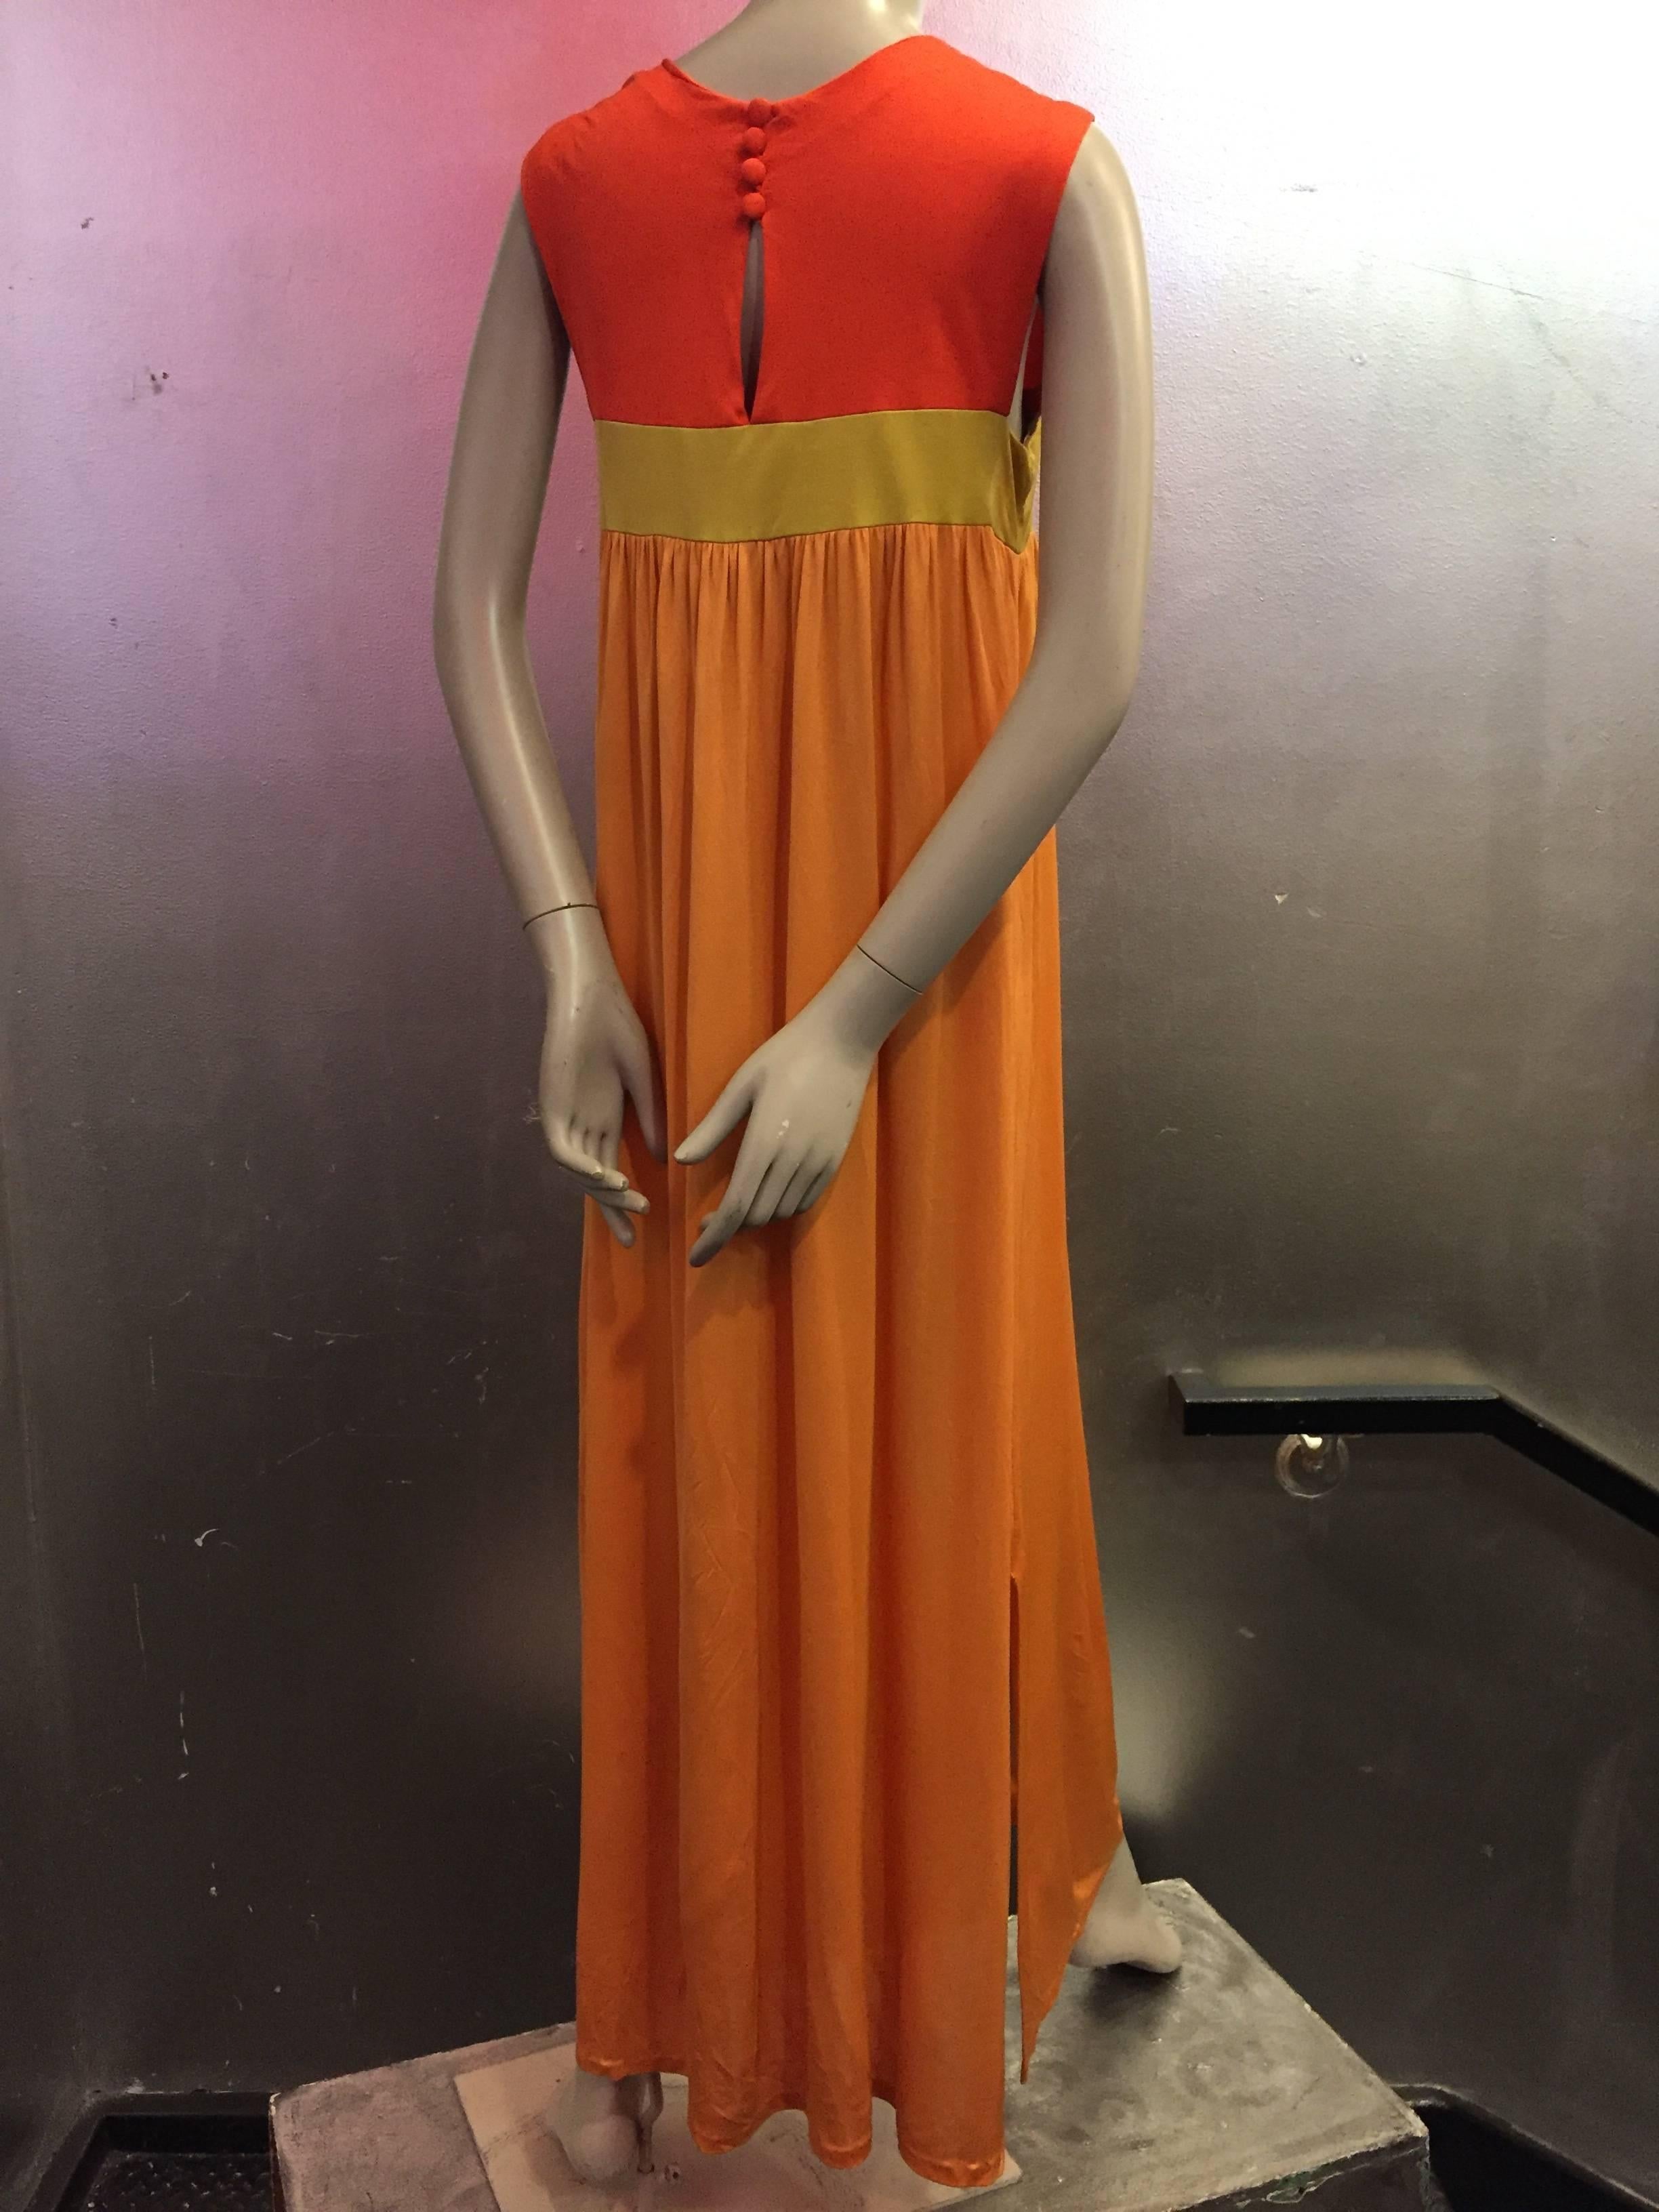 persimmon color dress